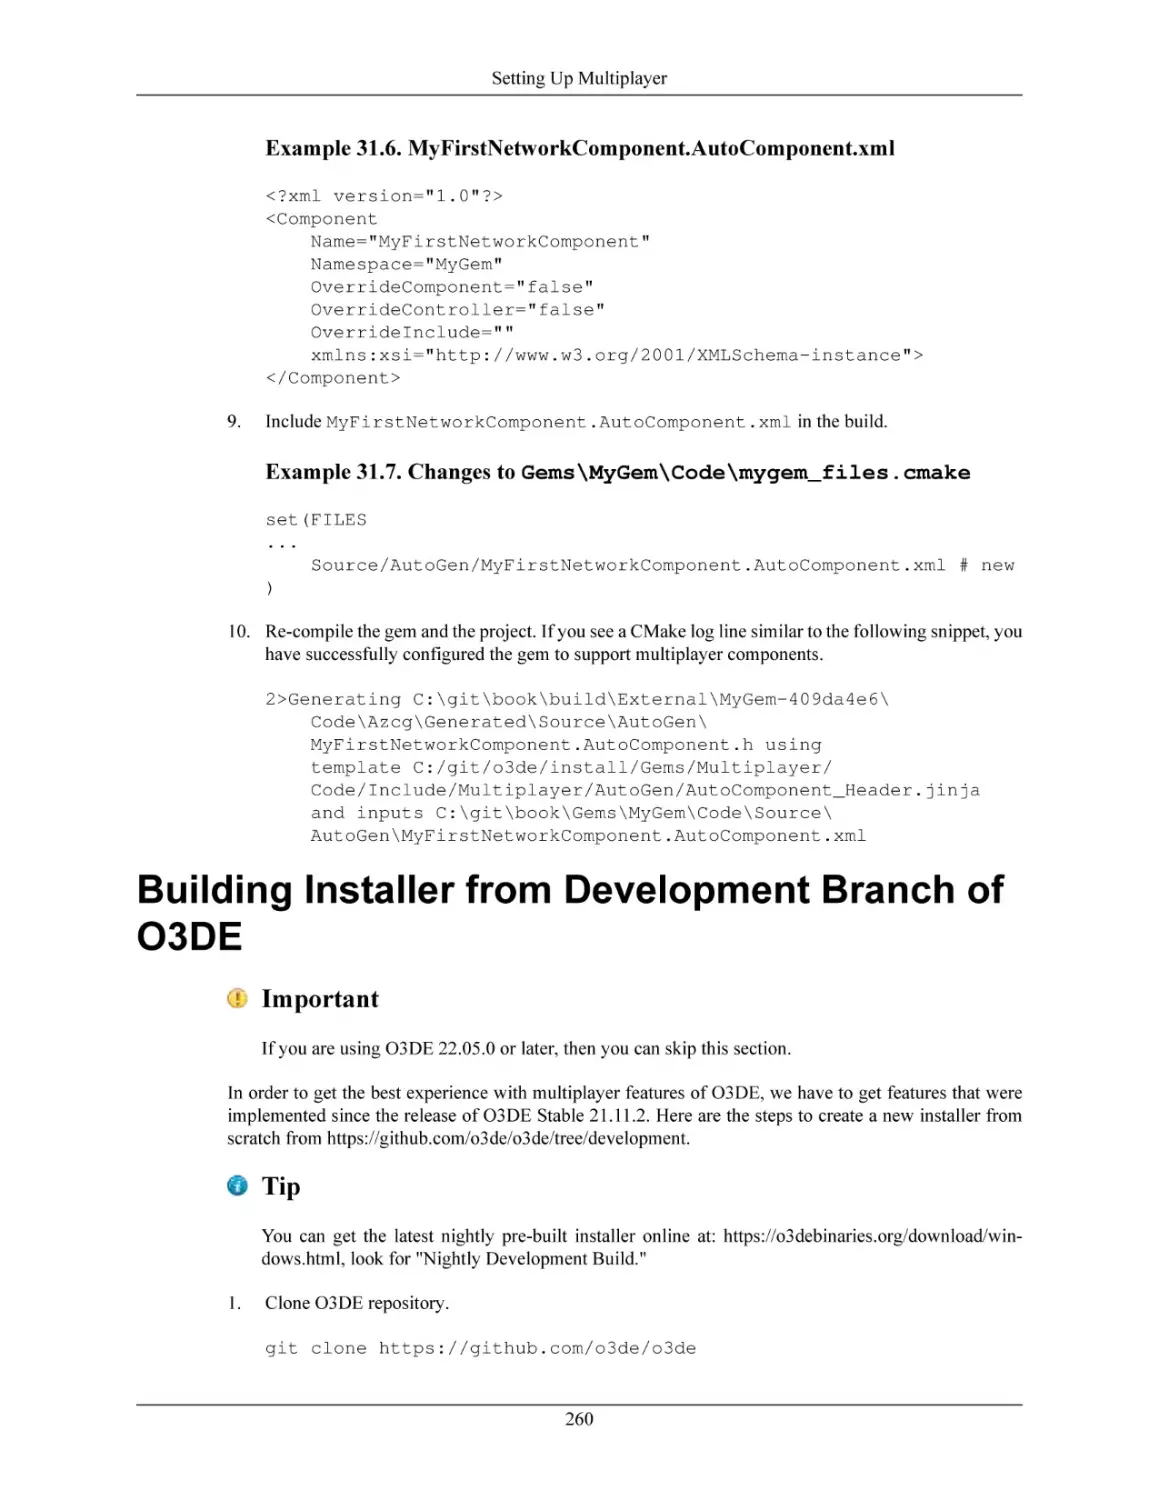 Building Installer from Development Branch of O3DE